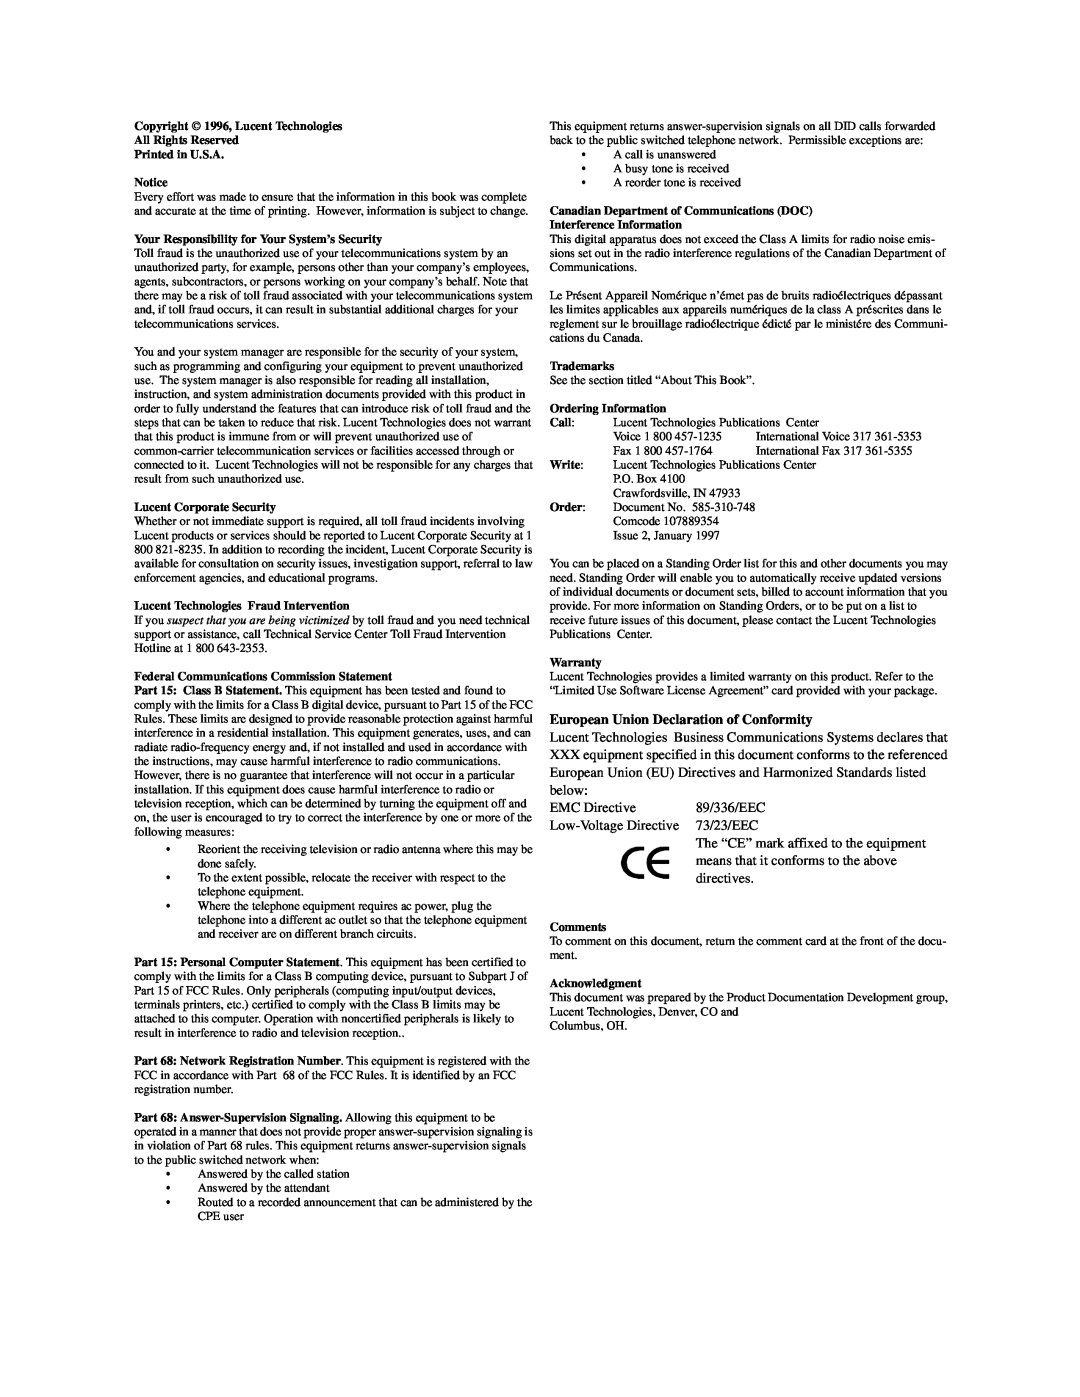 Lucent Technologies 585-310-748 manual European Union Declaration of Conformity, EMC Directive Low-VoltageDirective 